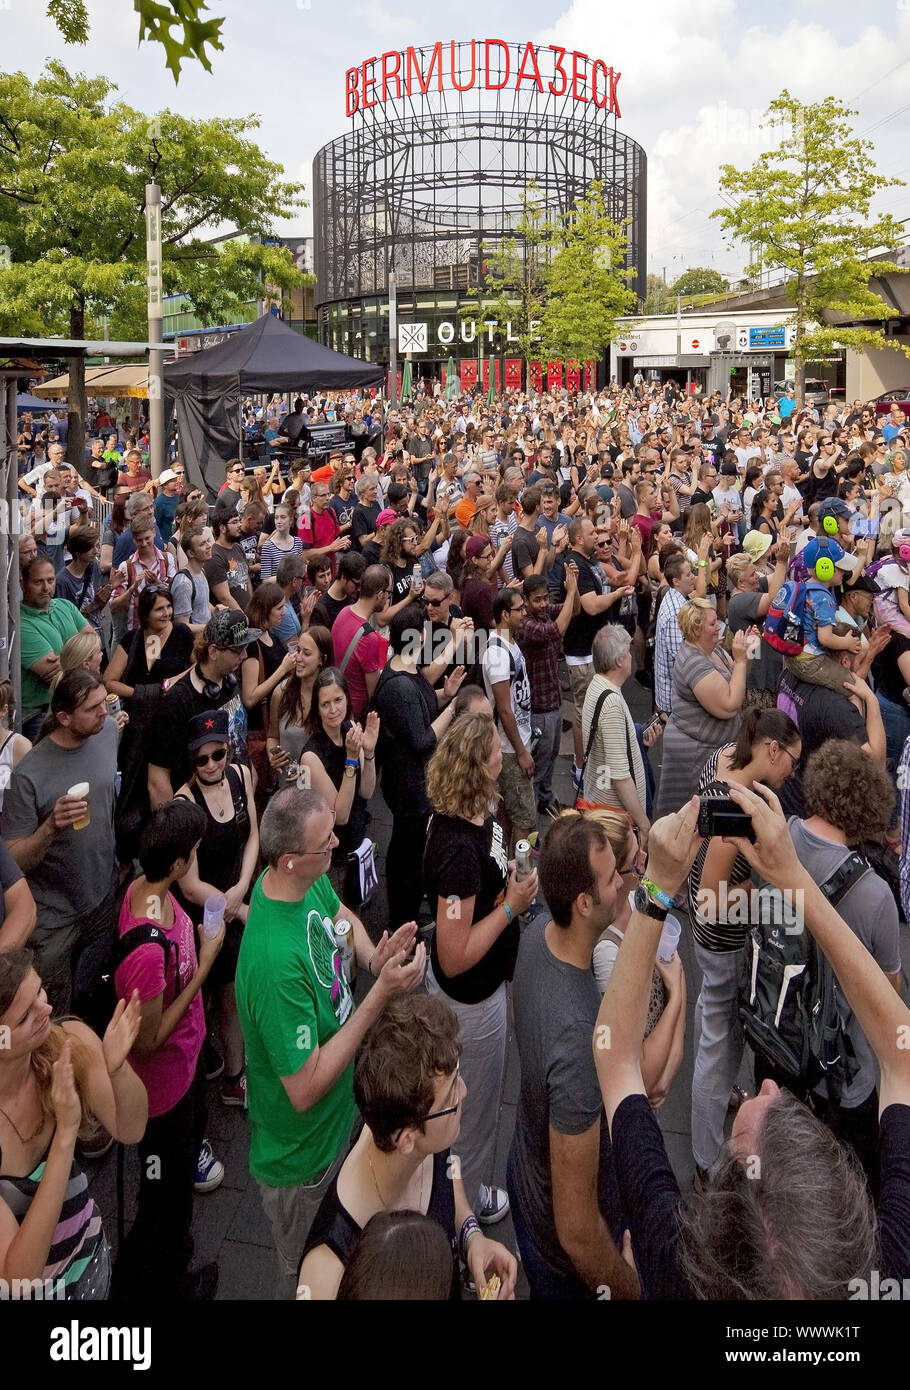 many people by the music festival Bochum Total, Bermudadreieck, Bochum, Ruhr area, Germany, Europe Stock Photo